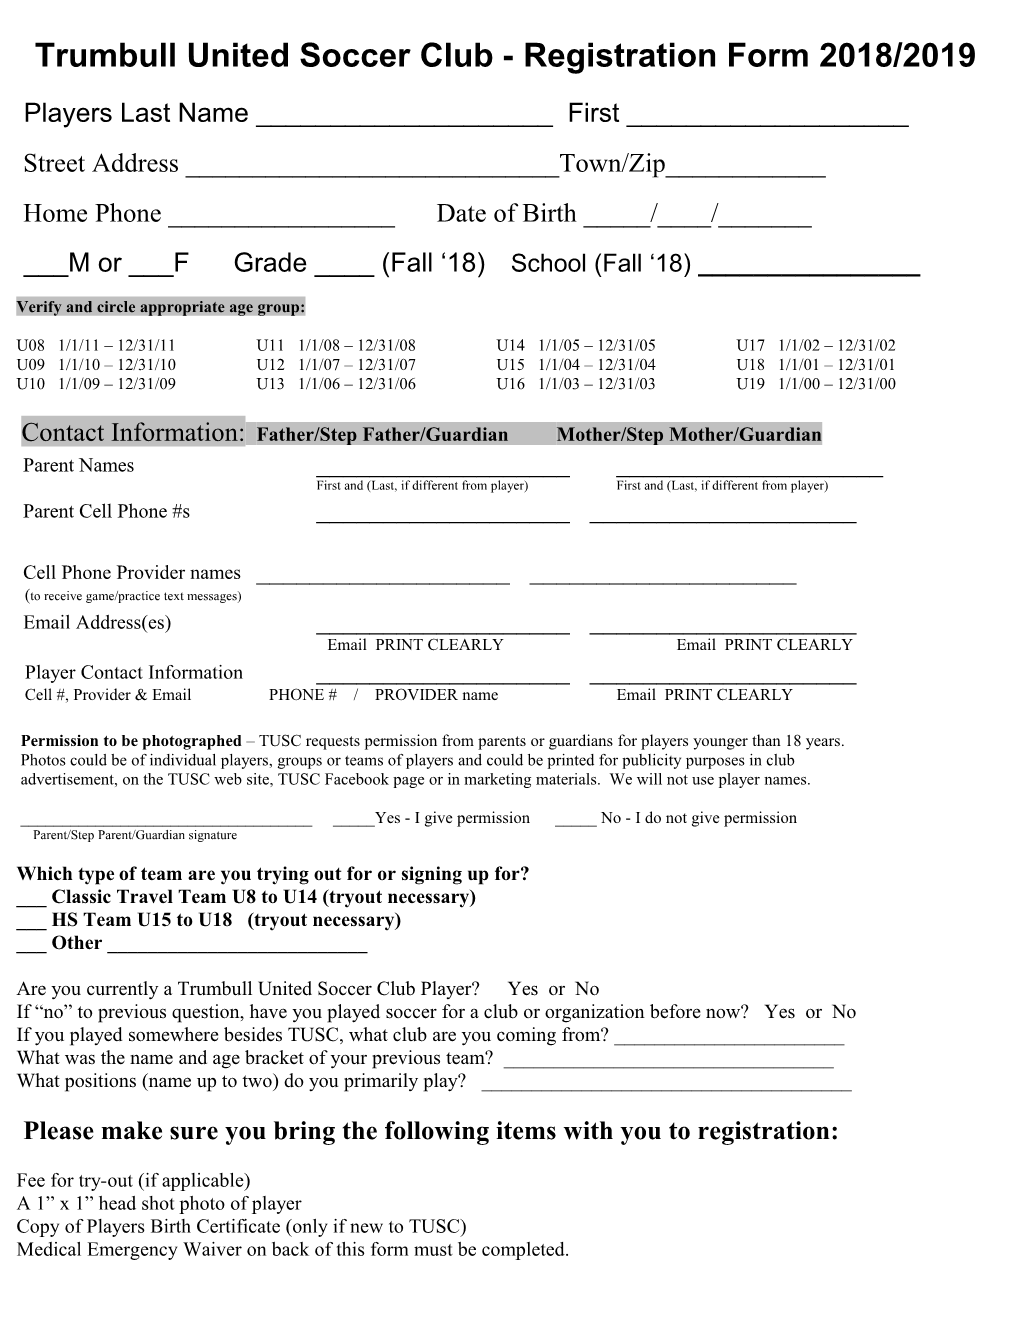 Trumbull United Soccerclub-Registration Form 2018/2019